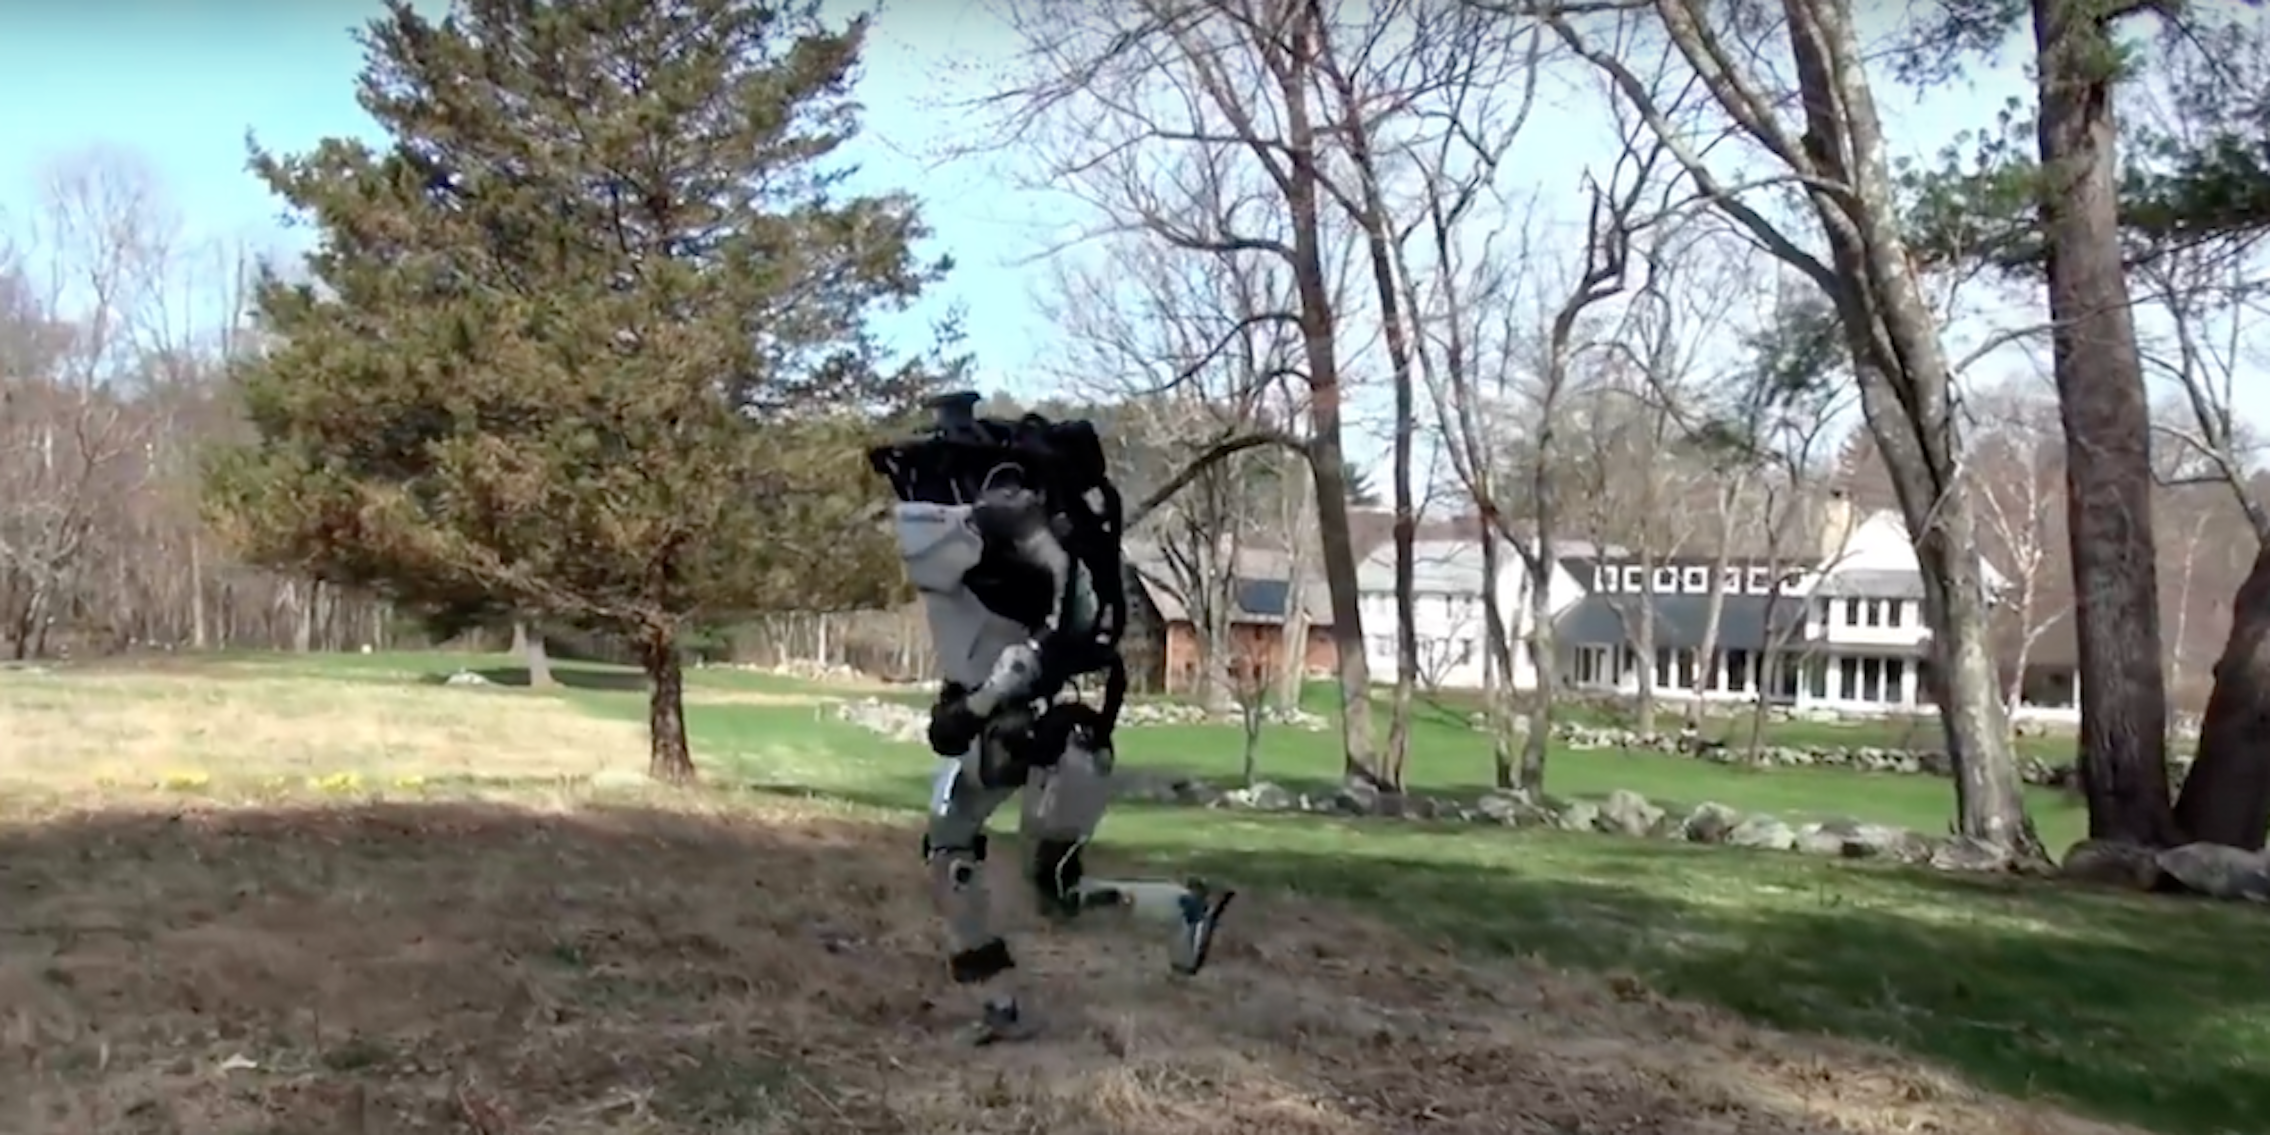 Atlas Robot runs